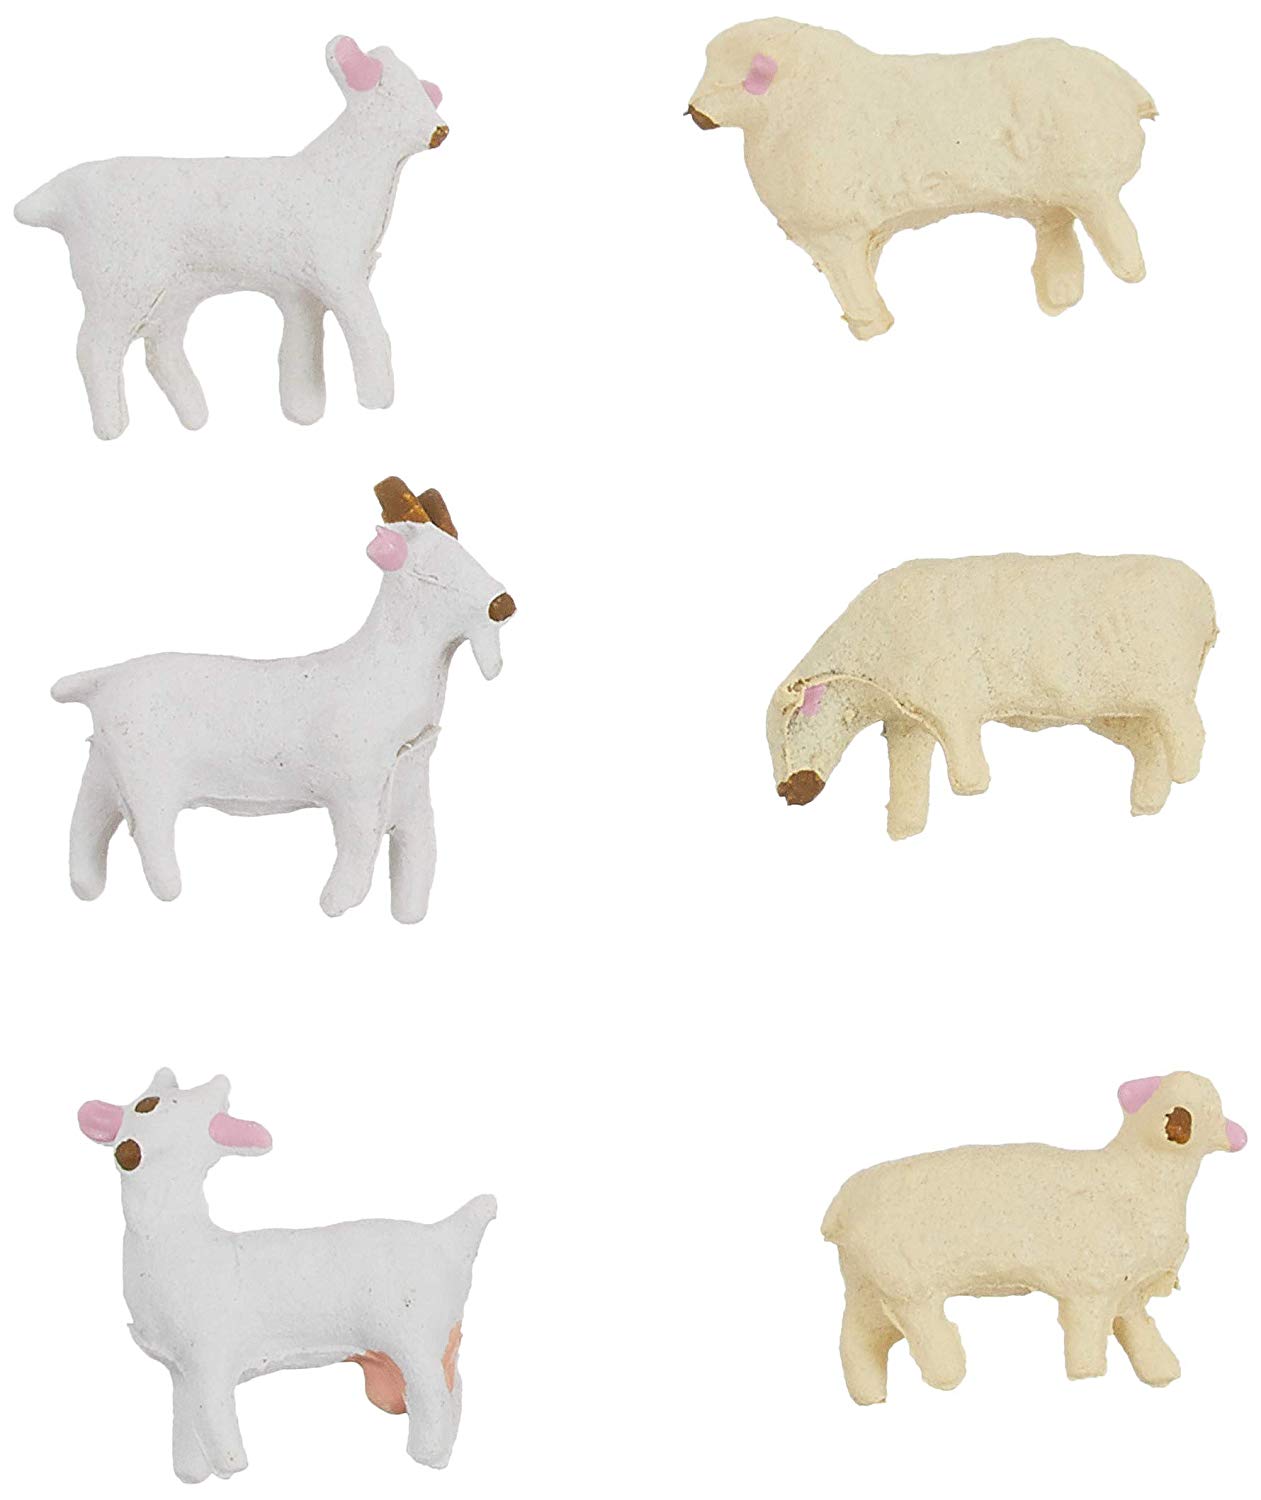 269977 The Animal 105 Sheep/Goat